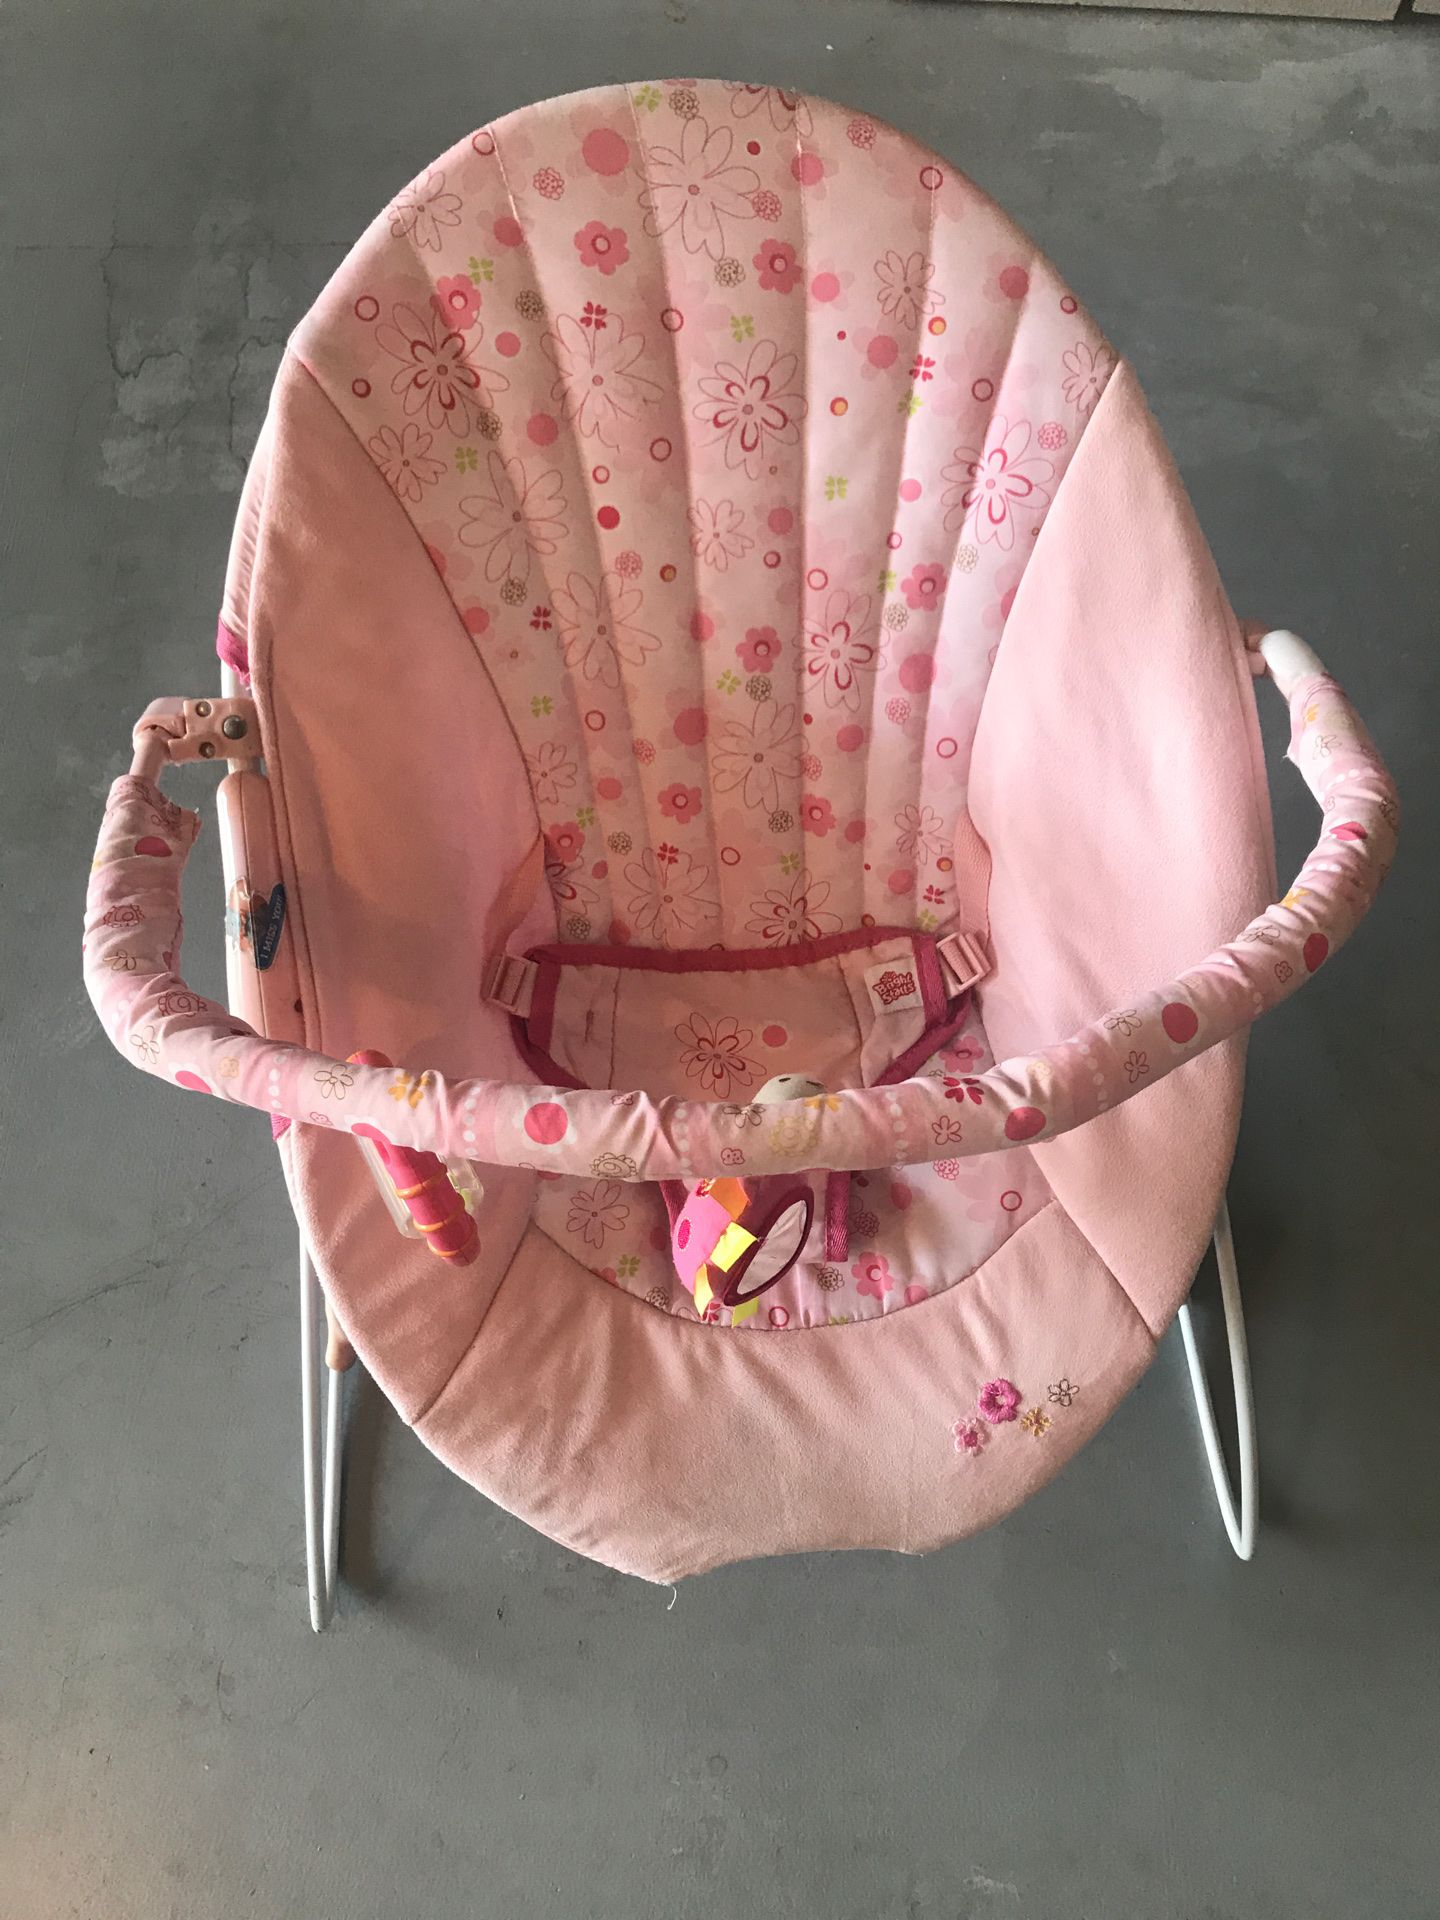 Boppy pillow & a Baby rocker chair! Read below..